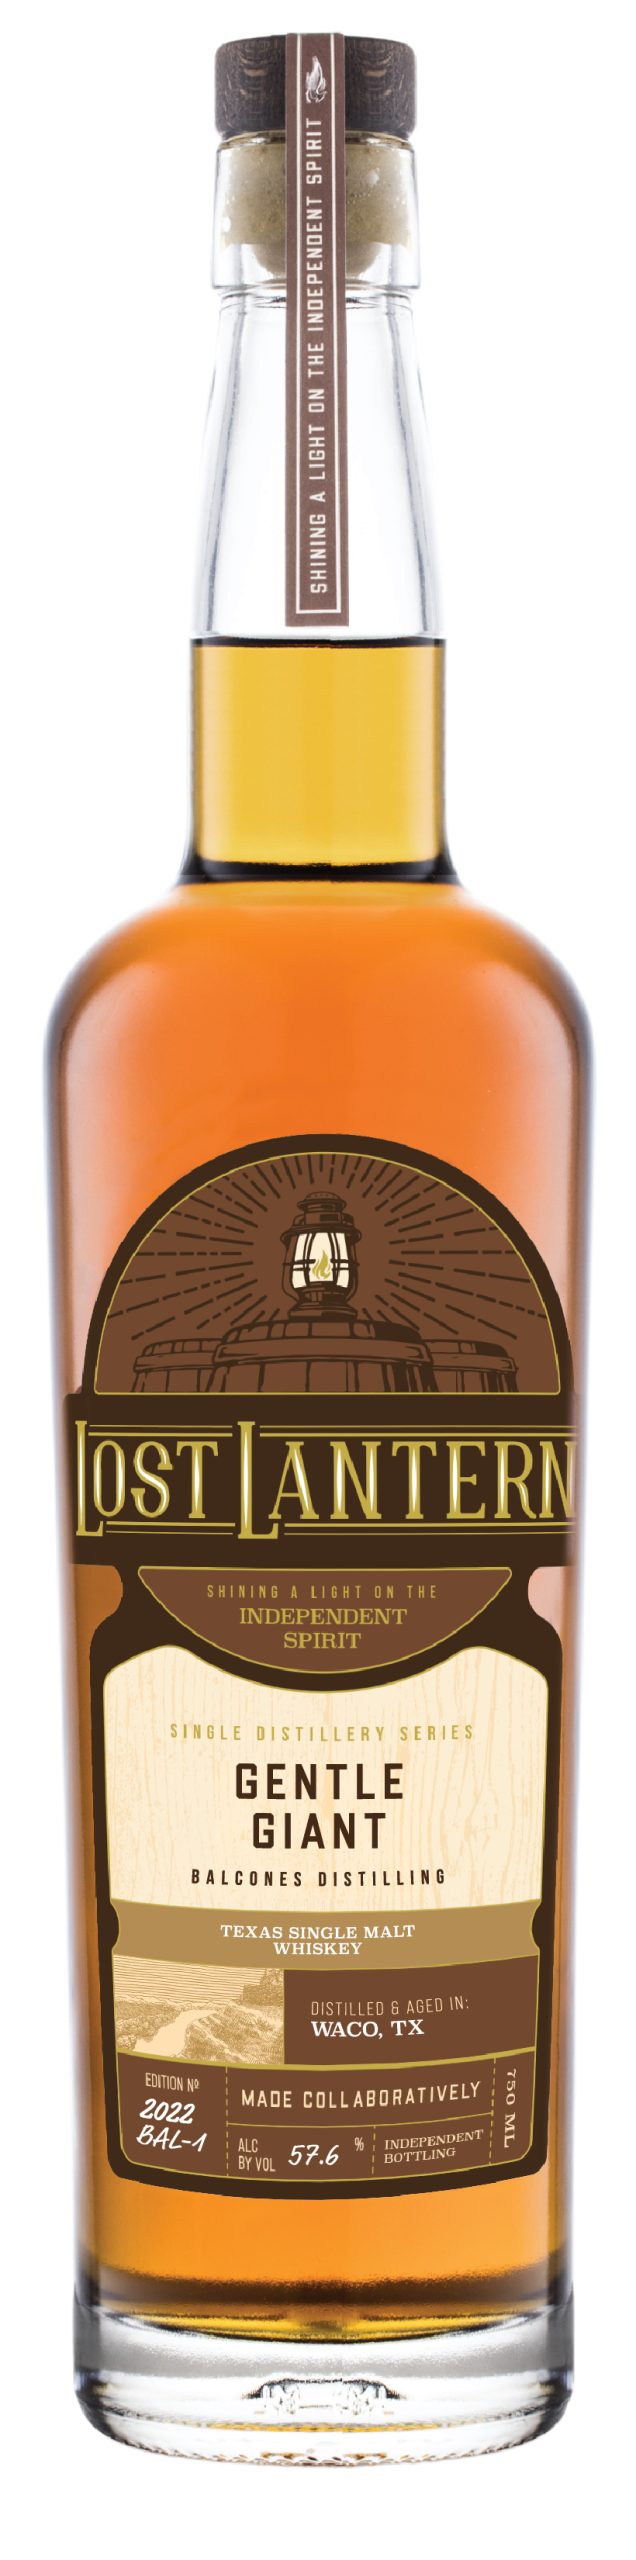 Lost Lantern "Gentle Giant" Balcones Distilling Texas Single Malt